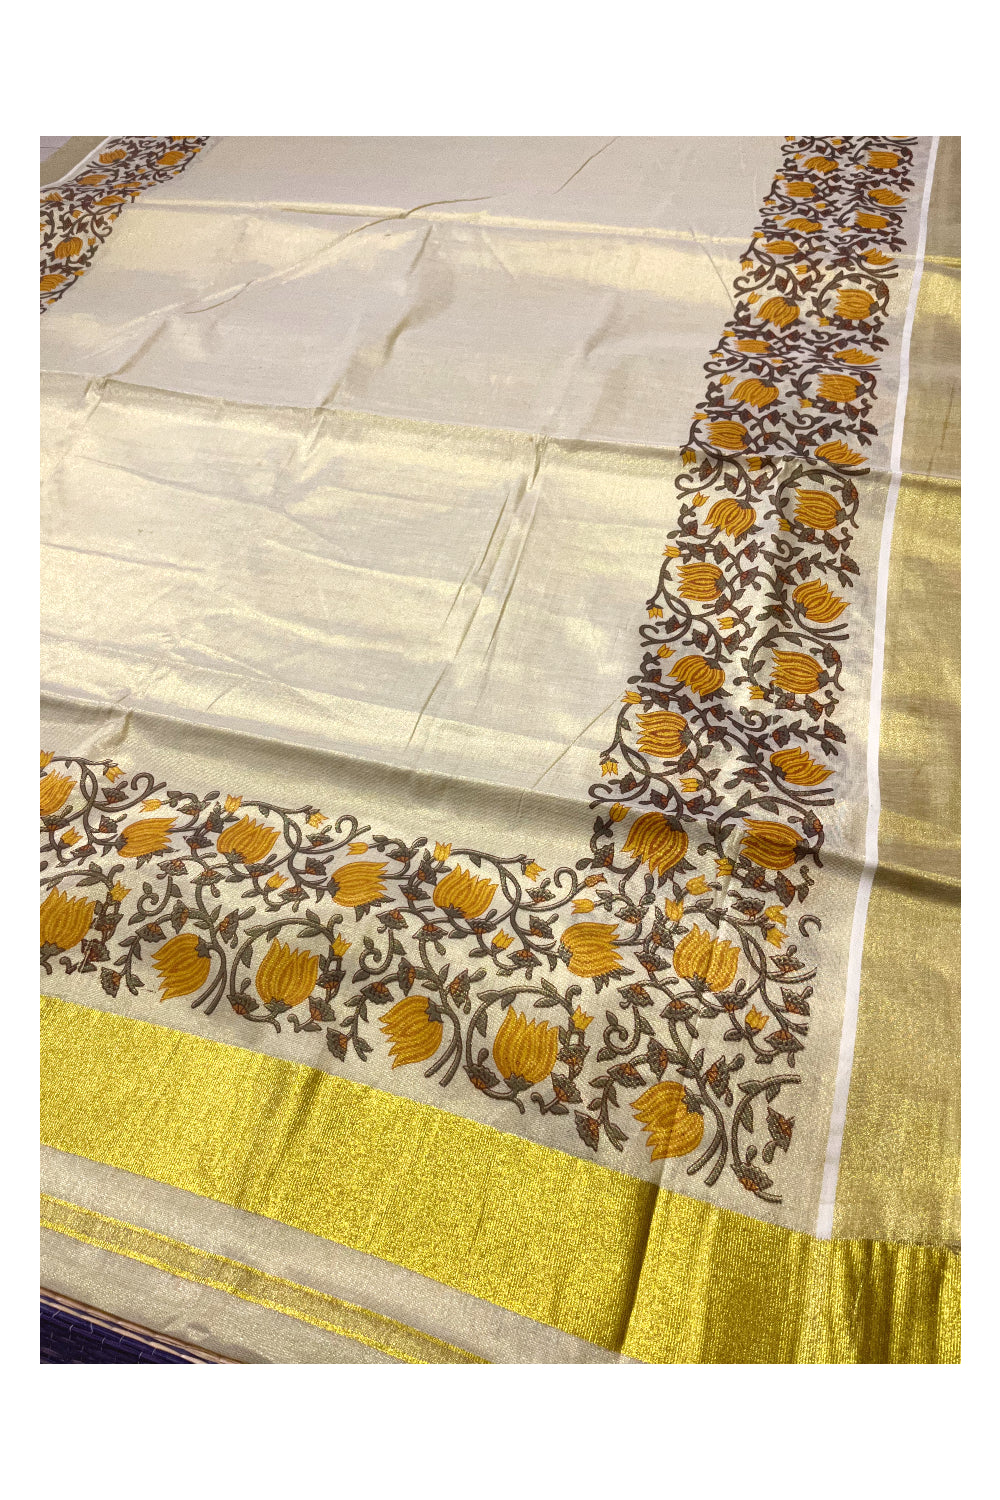 Southloom Jaipur Artisans & Kerala Weavers Collab Yellow and Grey Floral Printed Tissue Kasavu Saree